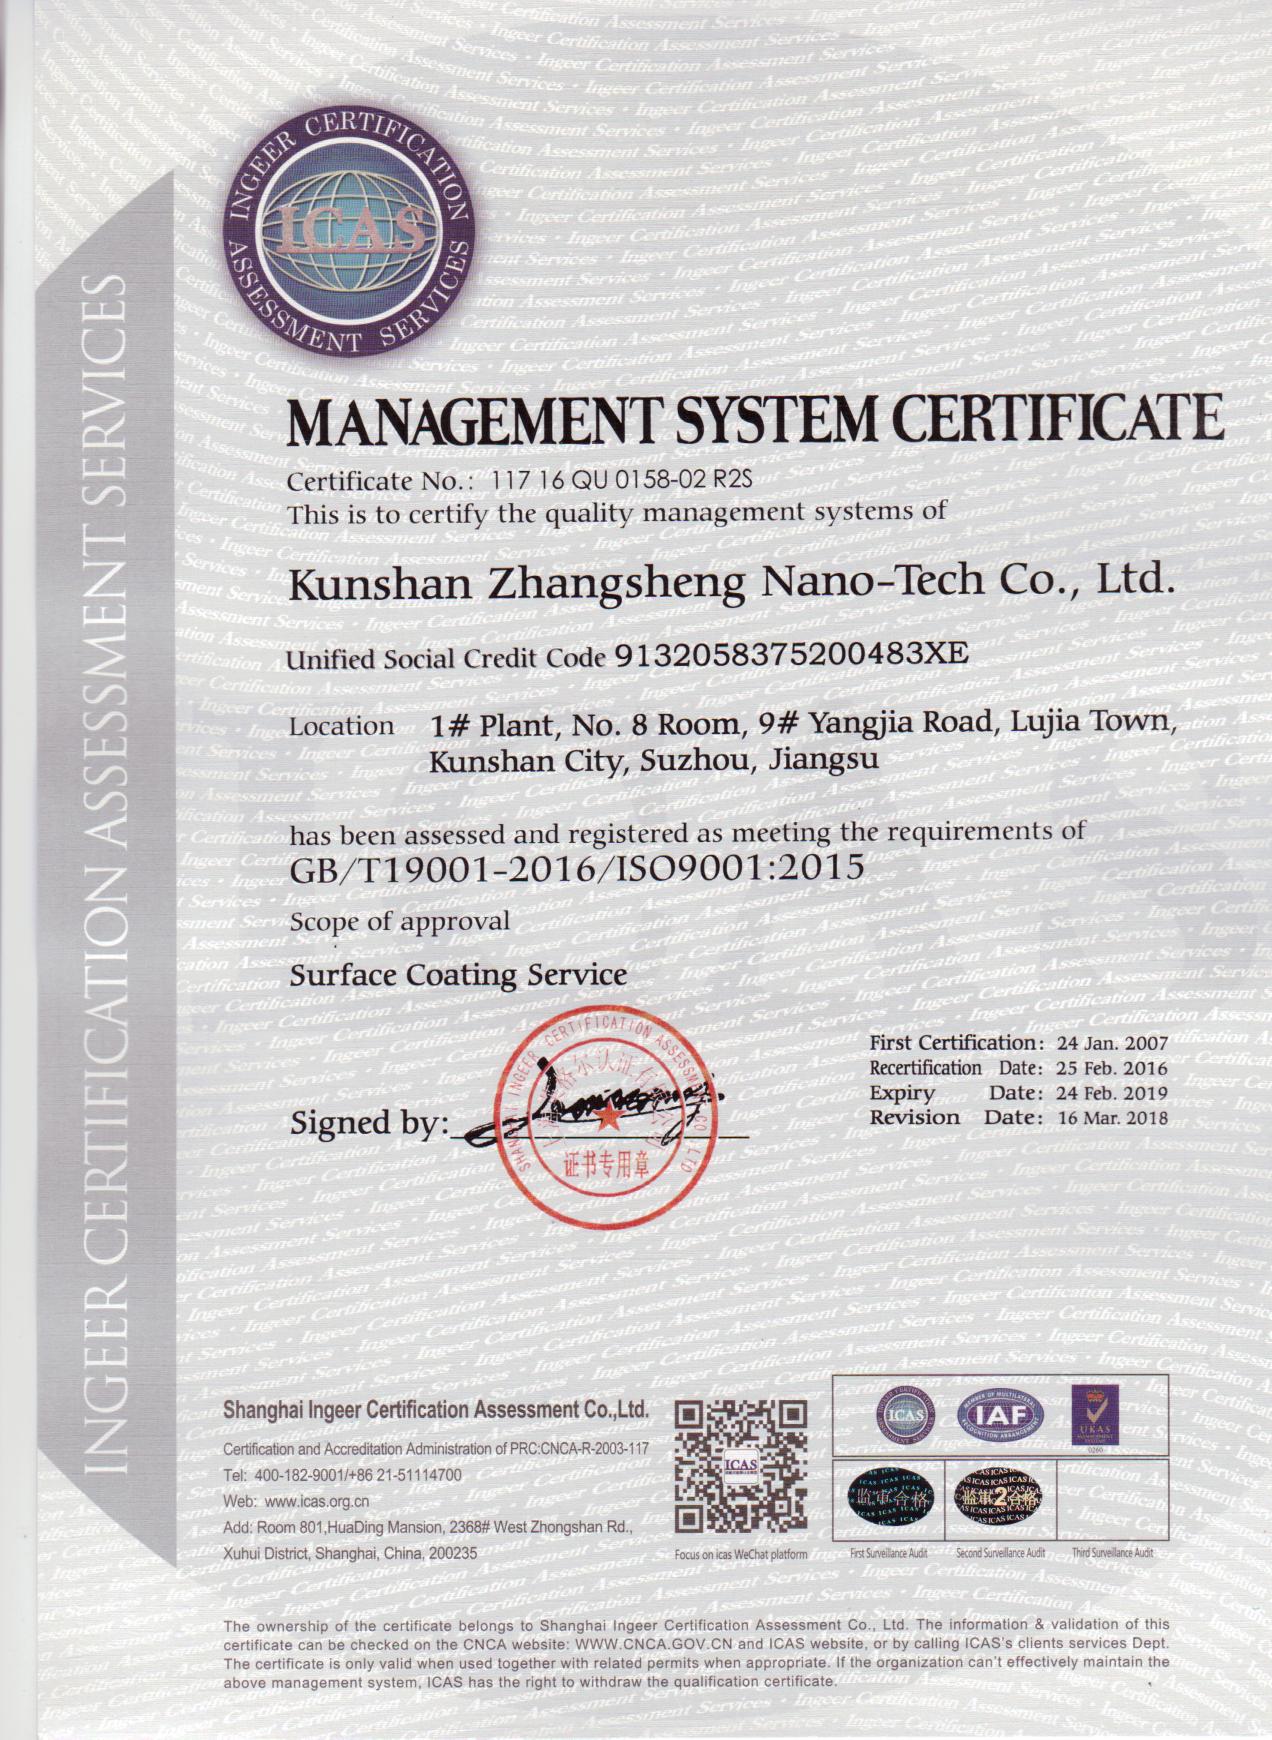 GB/T19001-2006/ISO9001: 2015